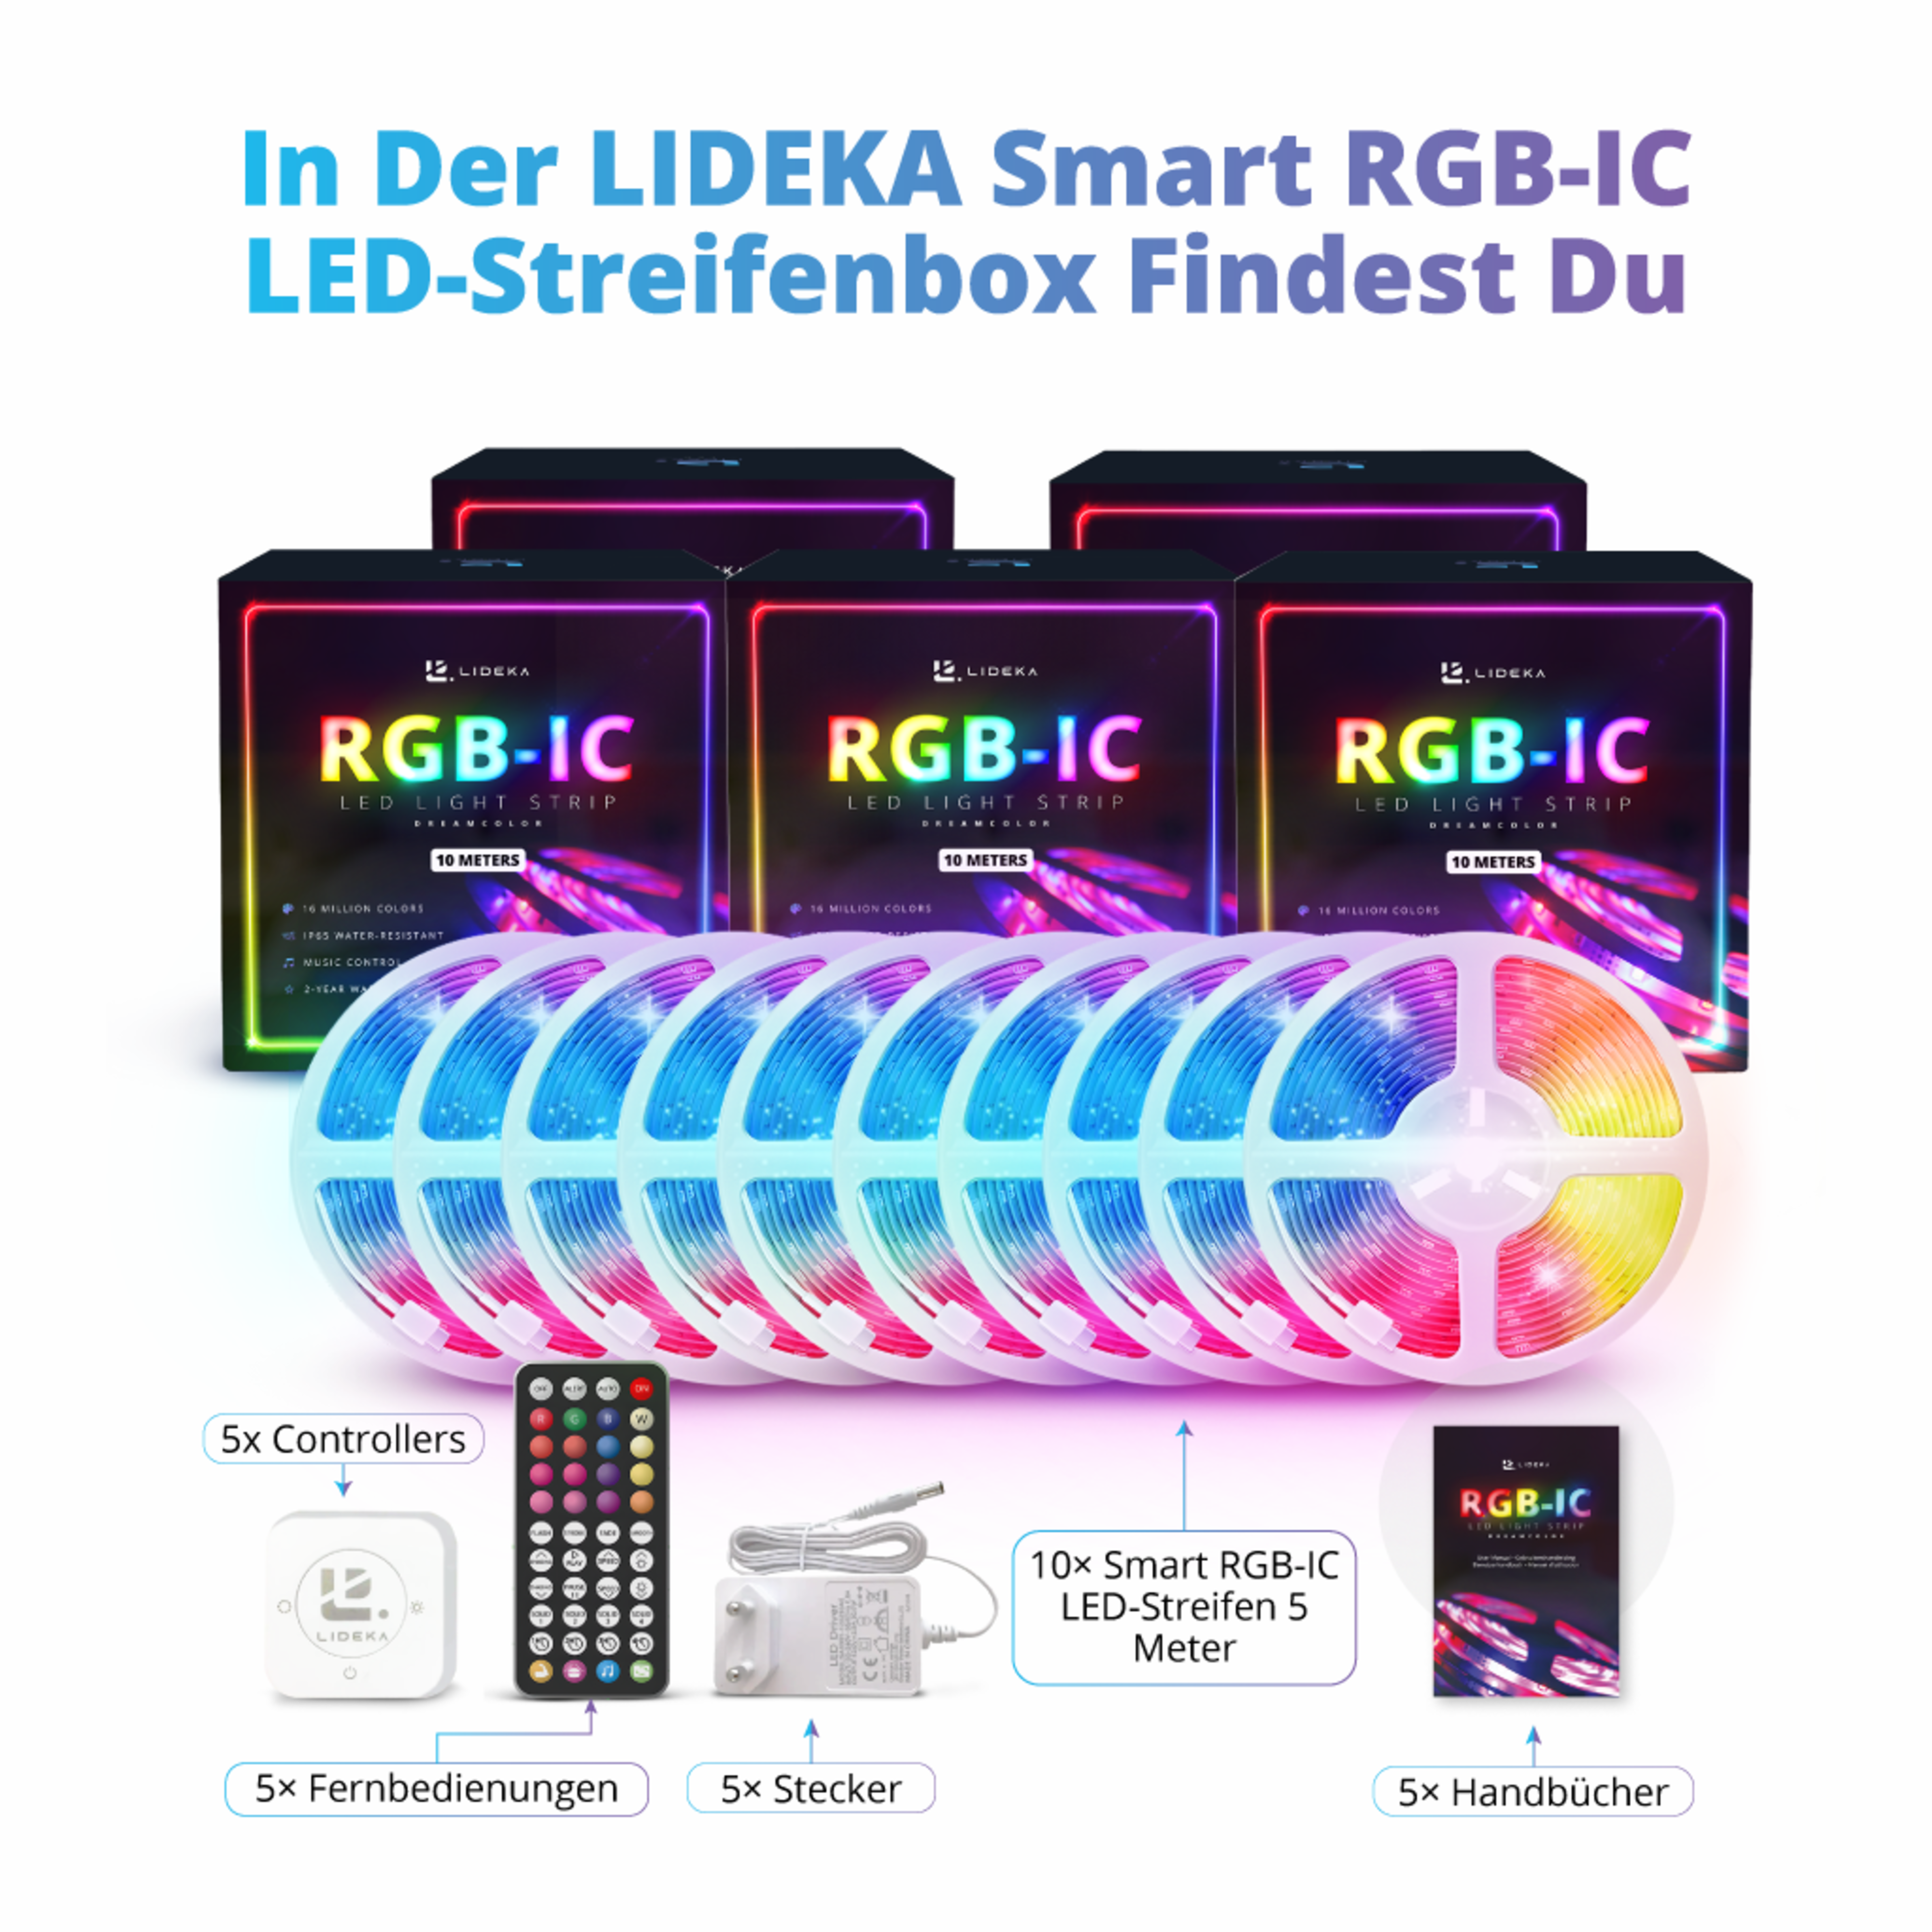 LIDEKA LED-Streifen Multicolors RGBIC Regenbogen strips LED 40m